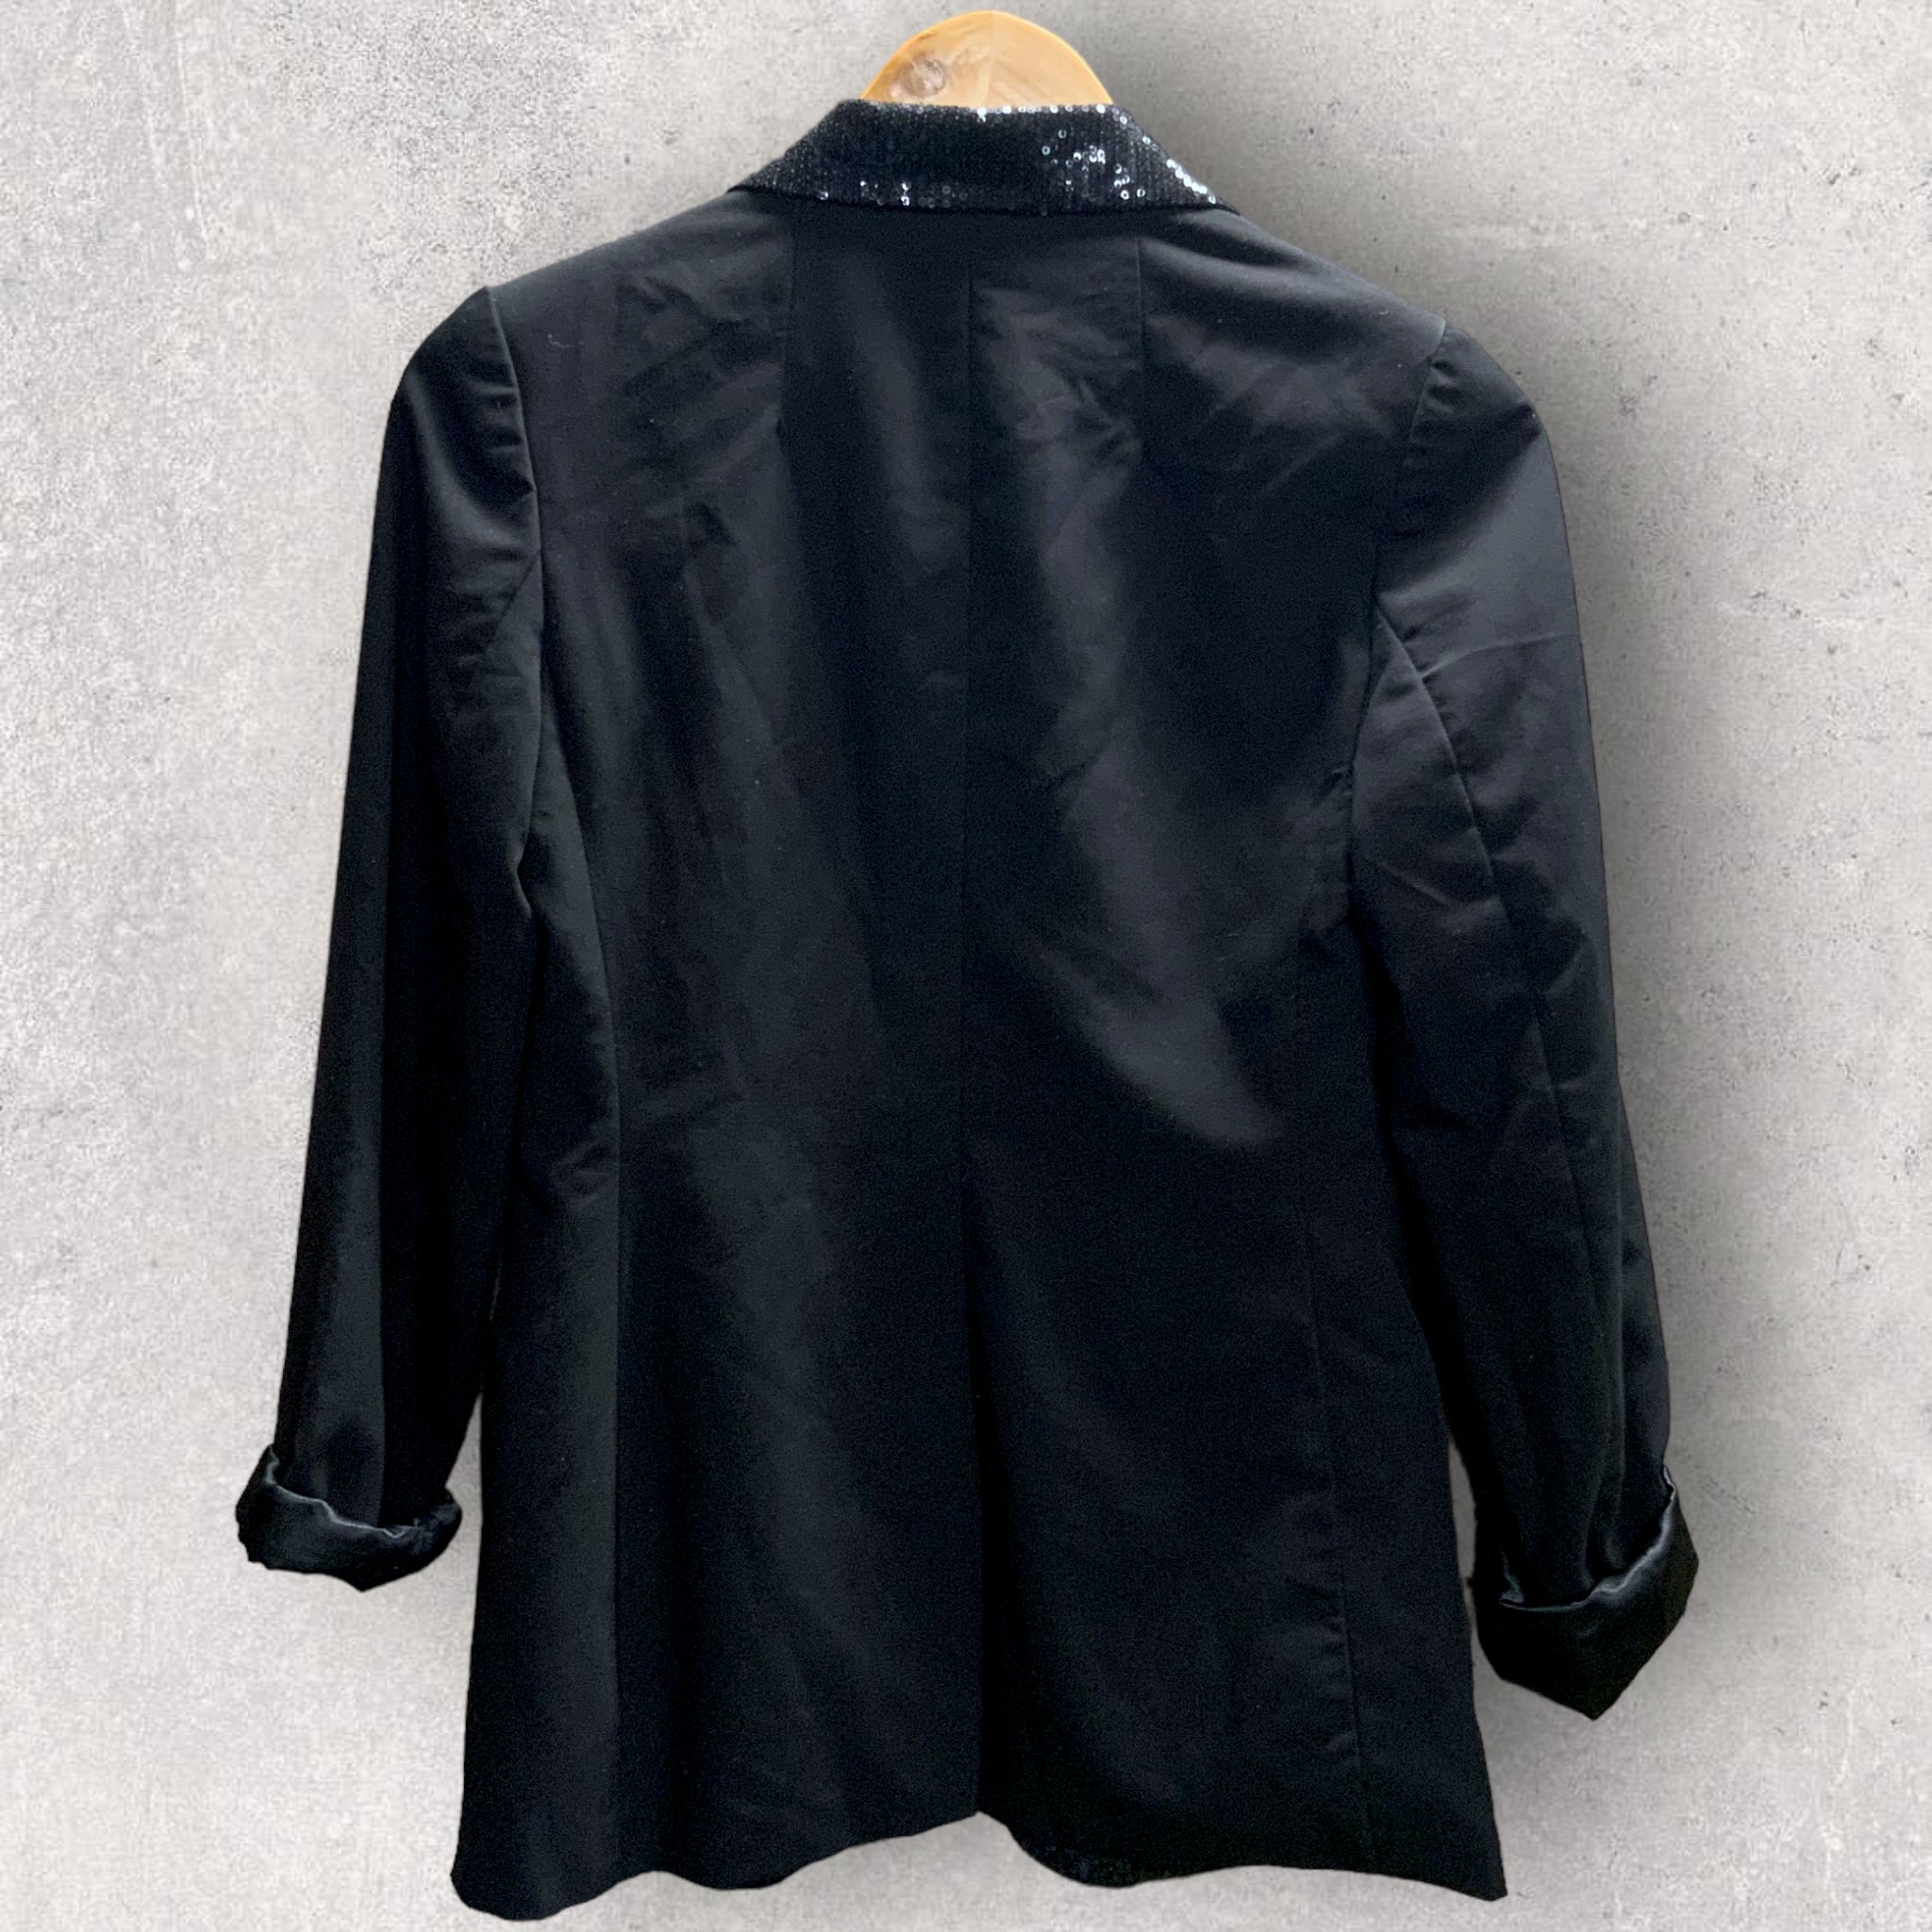 BARDOT Sequin Collar Black Blazer Jacket - Size 8